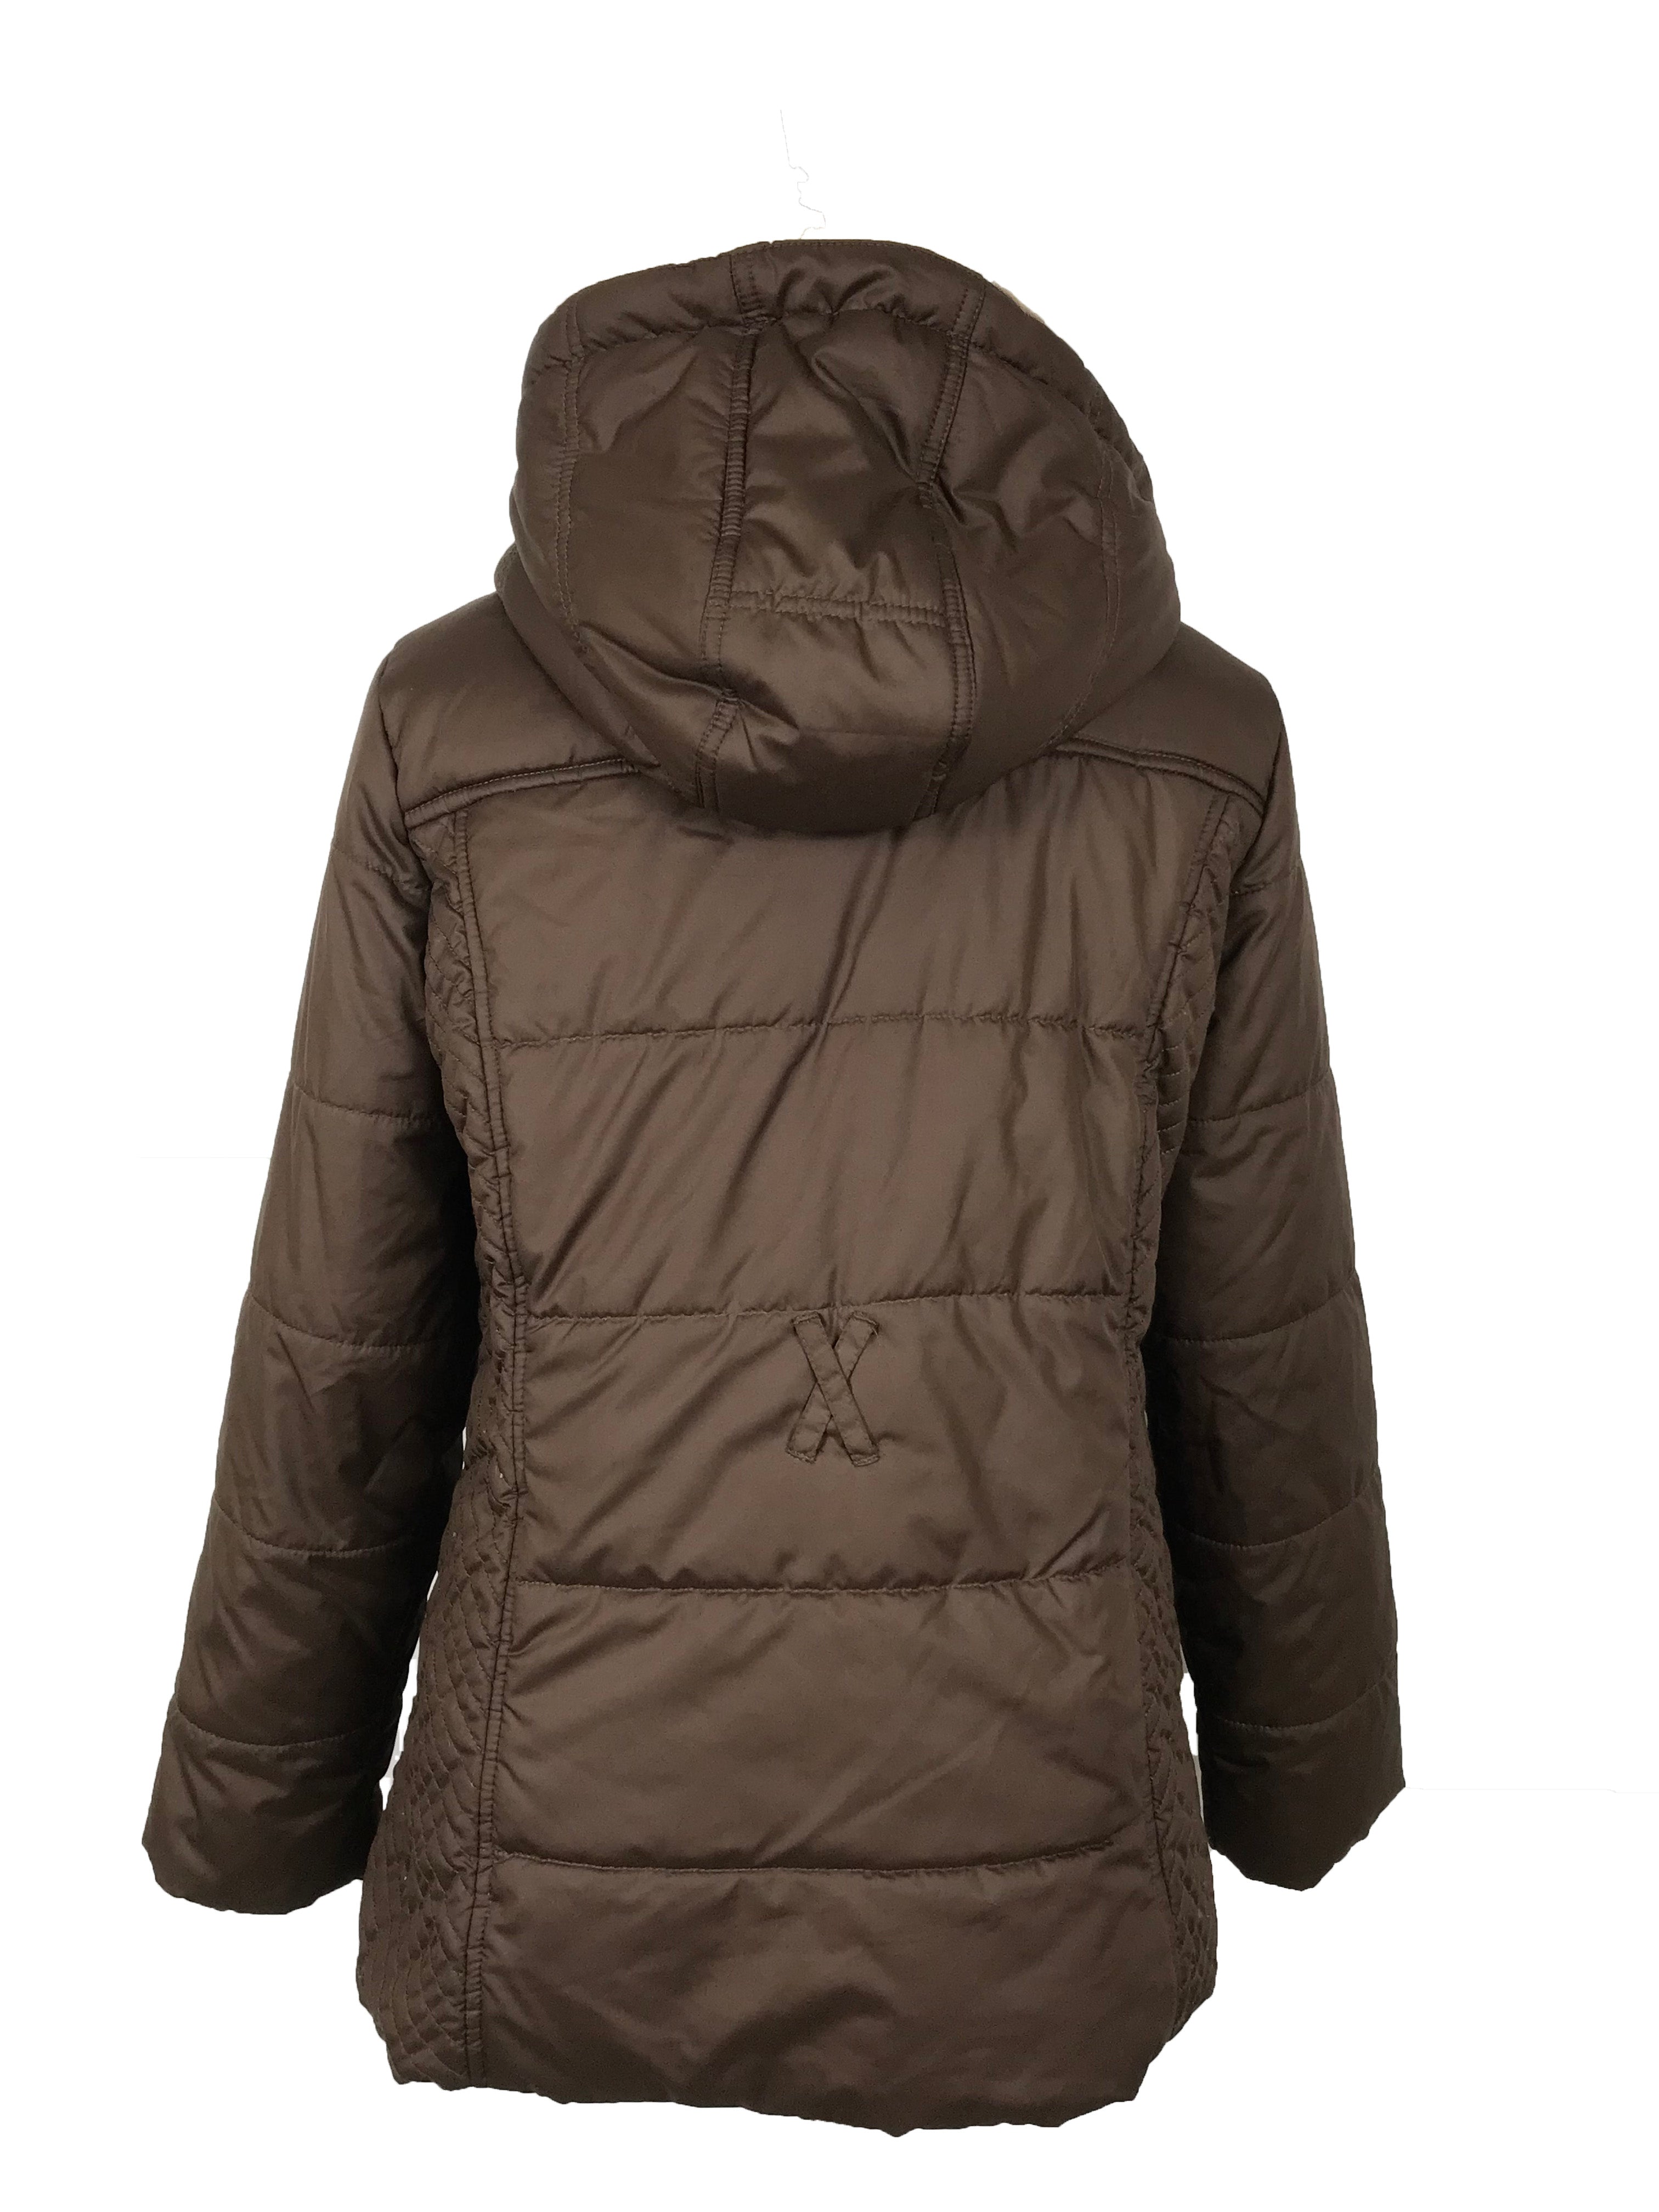 Tommy Hilfiger Brown Winter Coat Women's Size XL